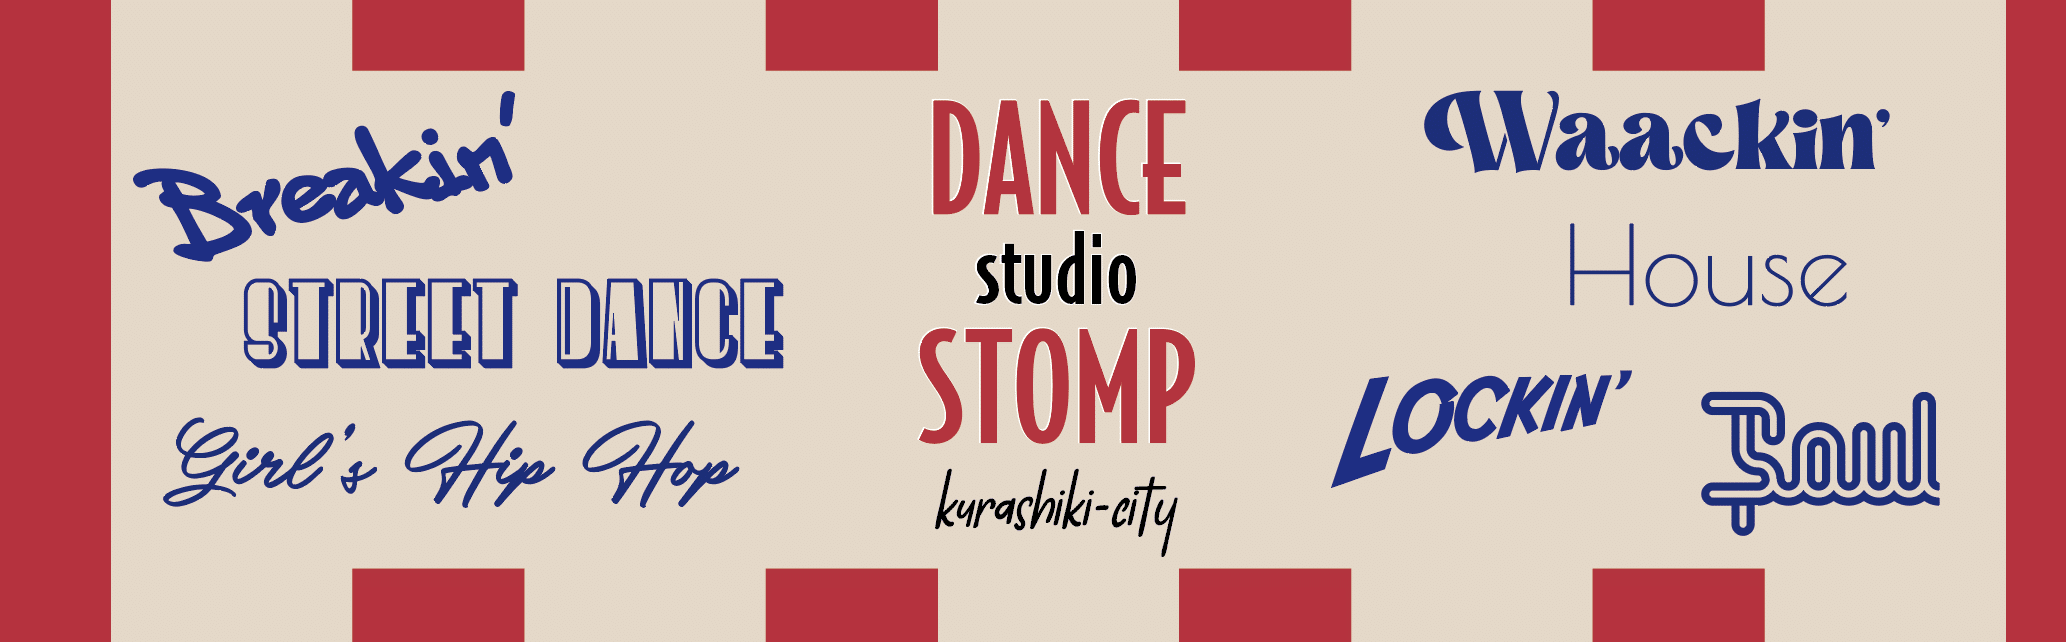 DANCE STUDIO STOMP 倉敷店3